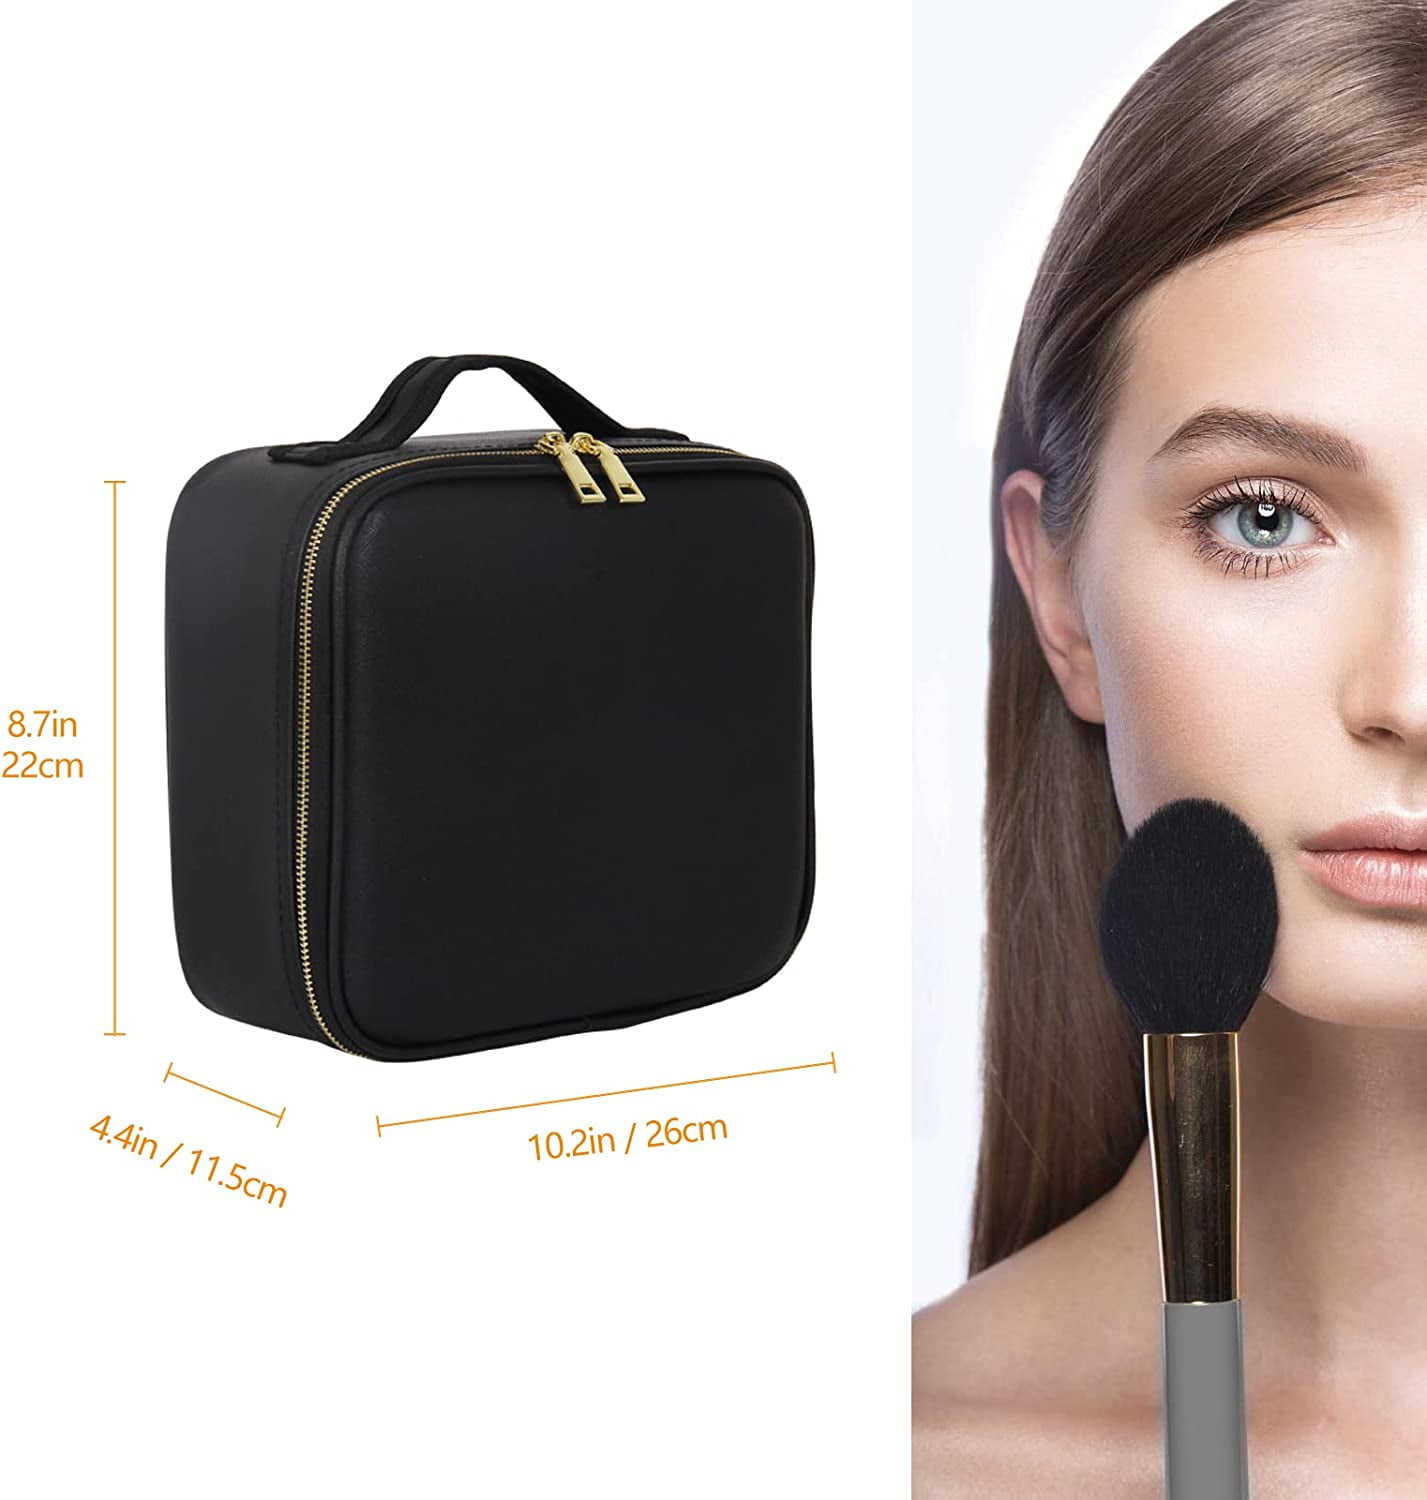 Katadem Travel Makeup Bag - Large Opening, Portable, Grid-Pink